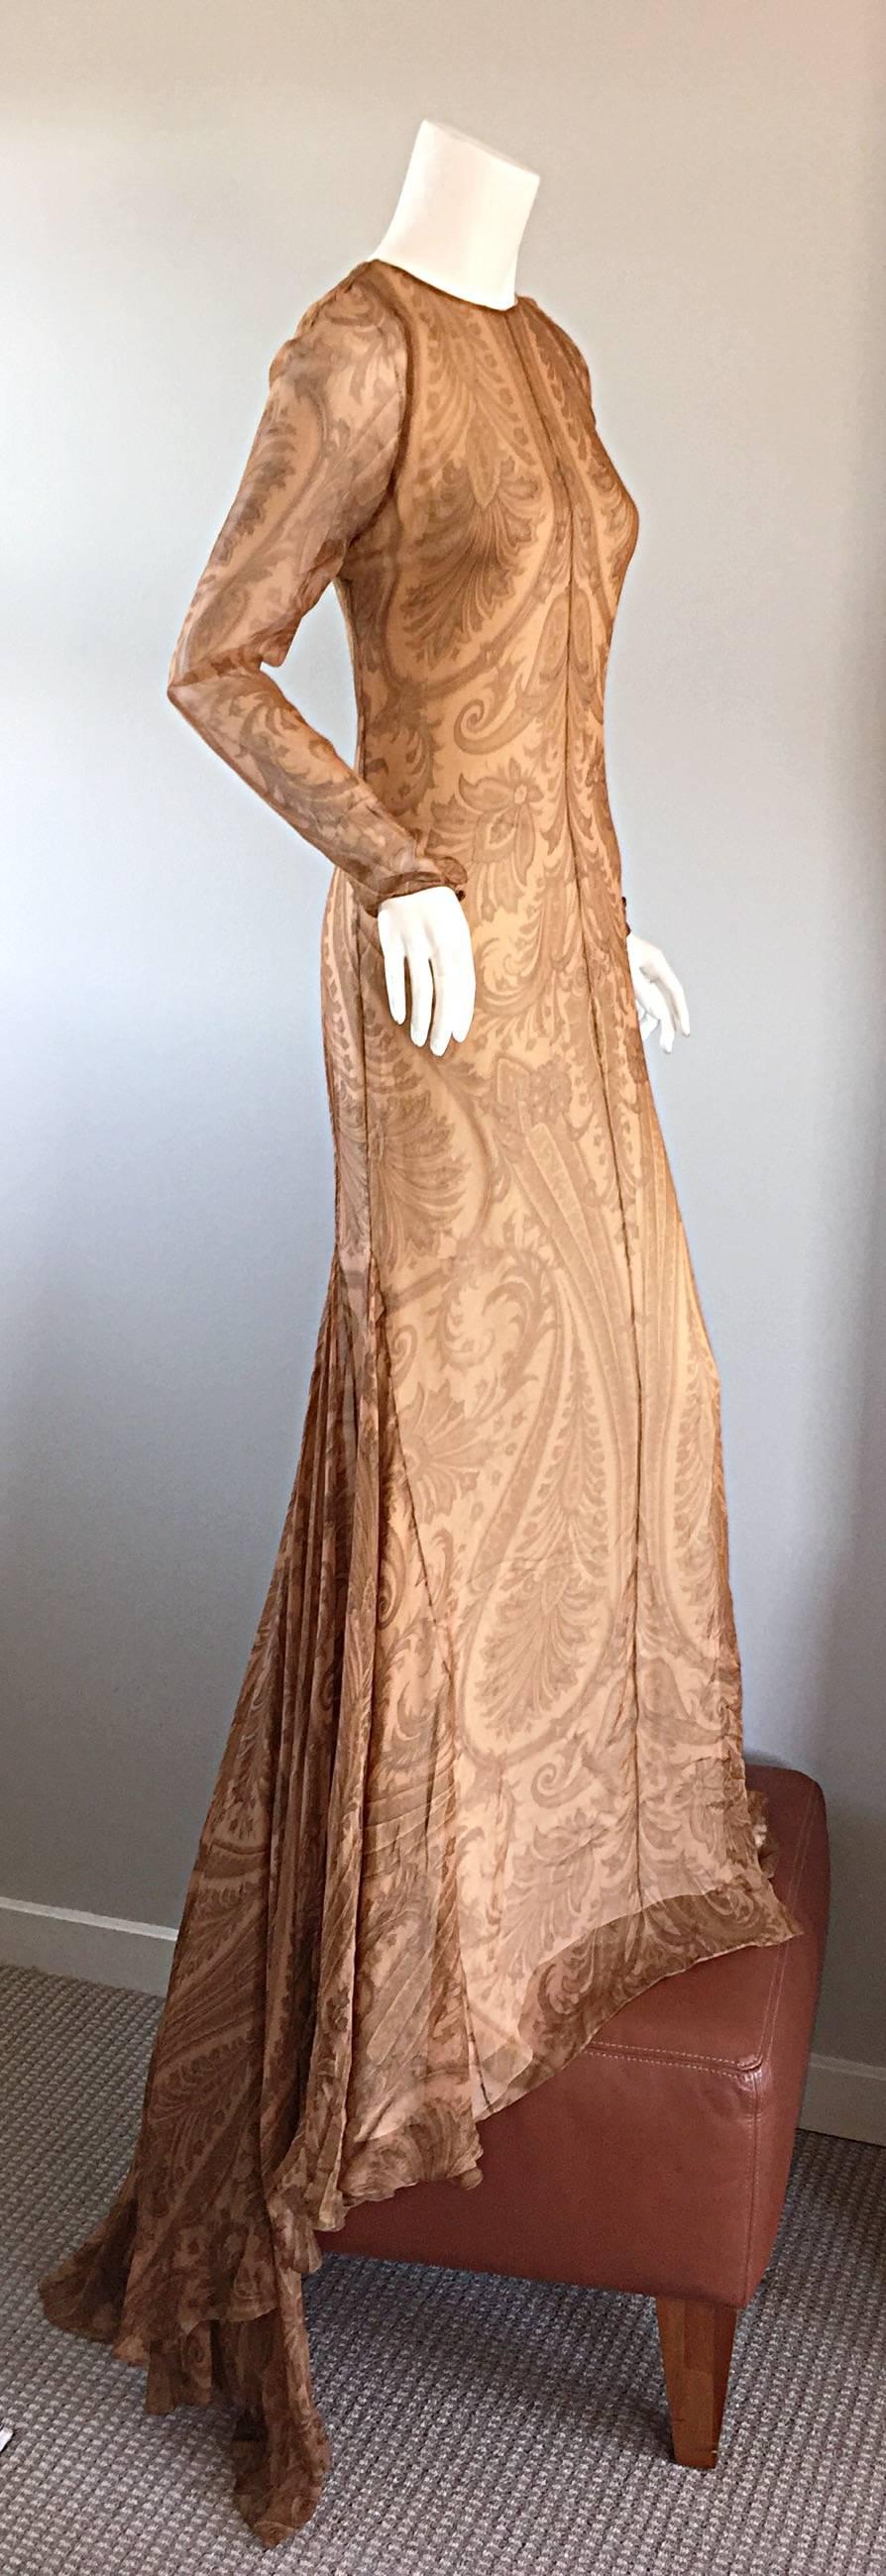 Spectacular Vintage Bill Blass Original Runway Sample Gown w/ Dramatic Train 1